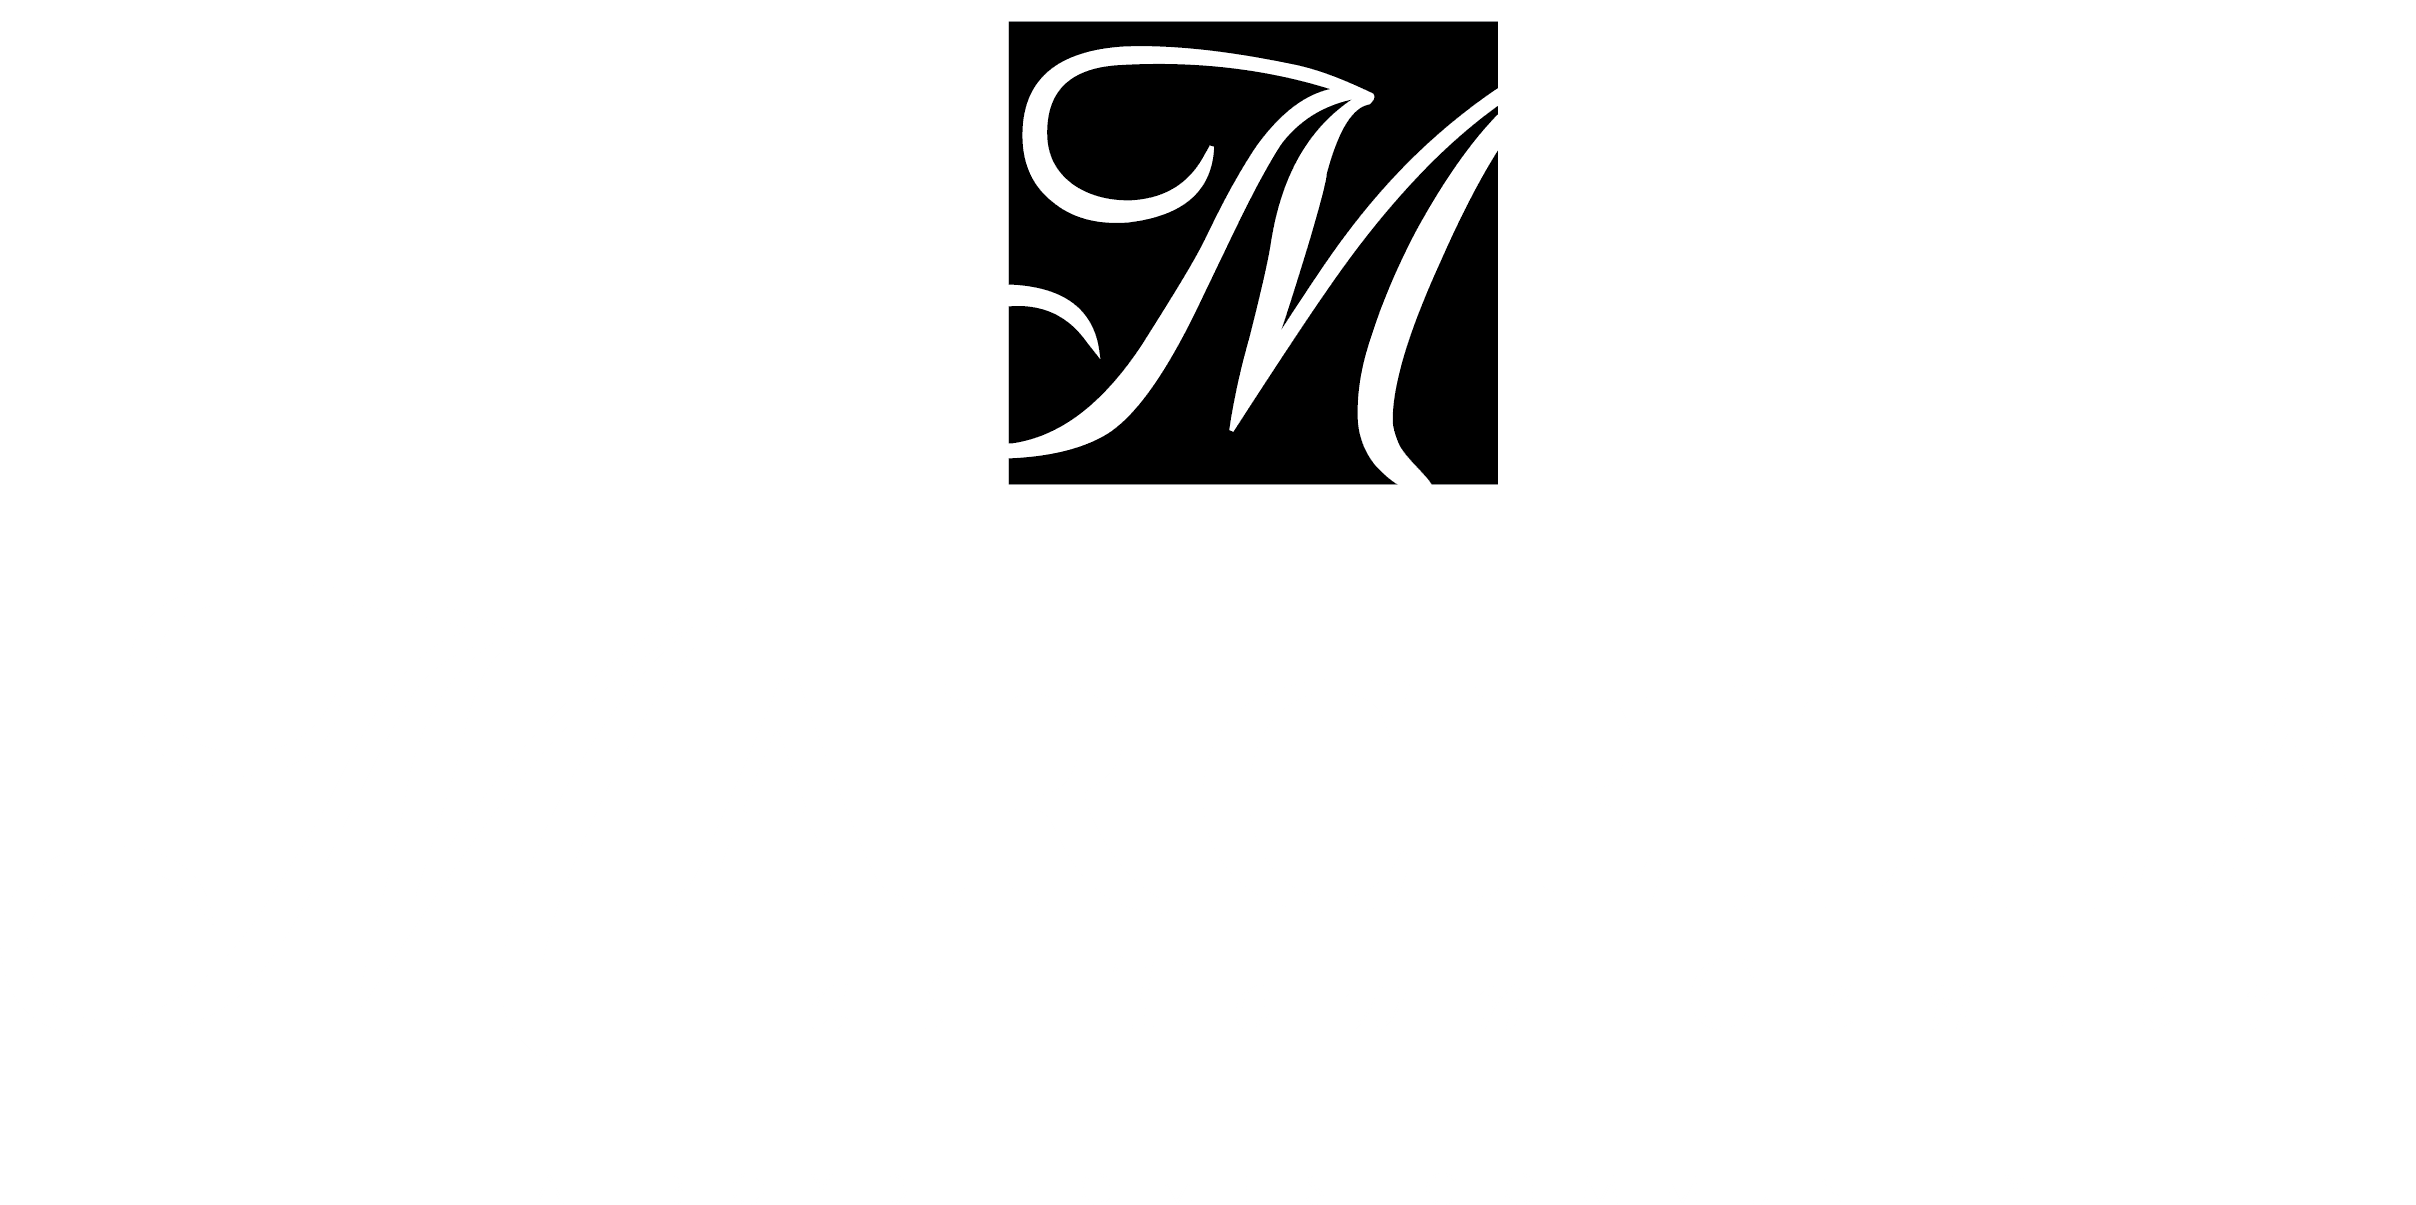 Marcella at Town Center logo